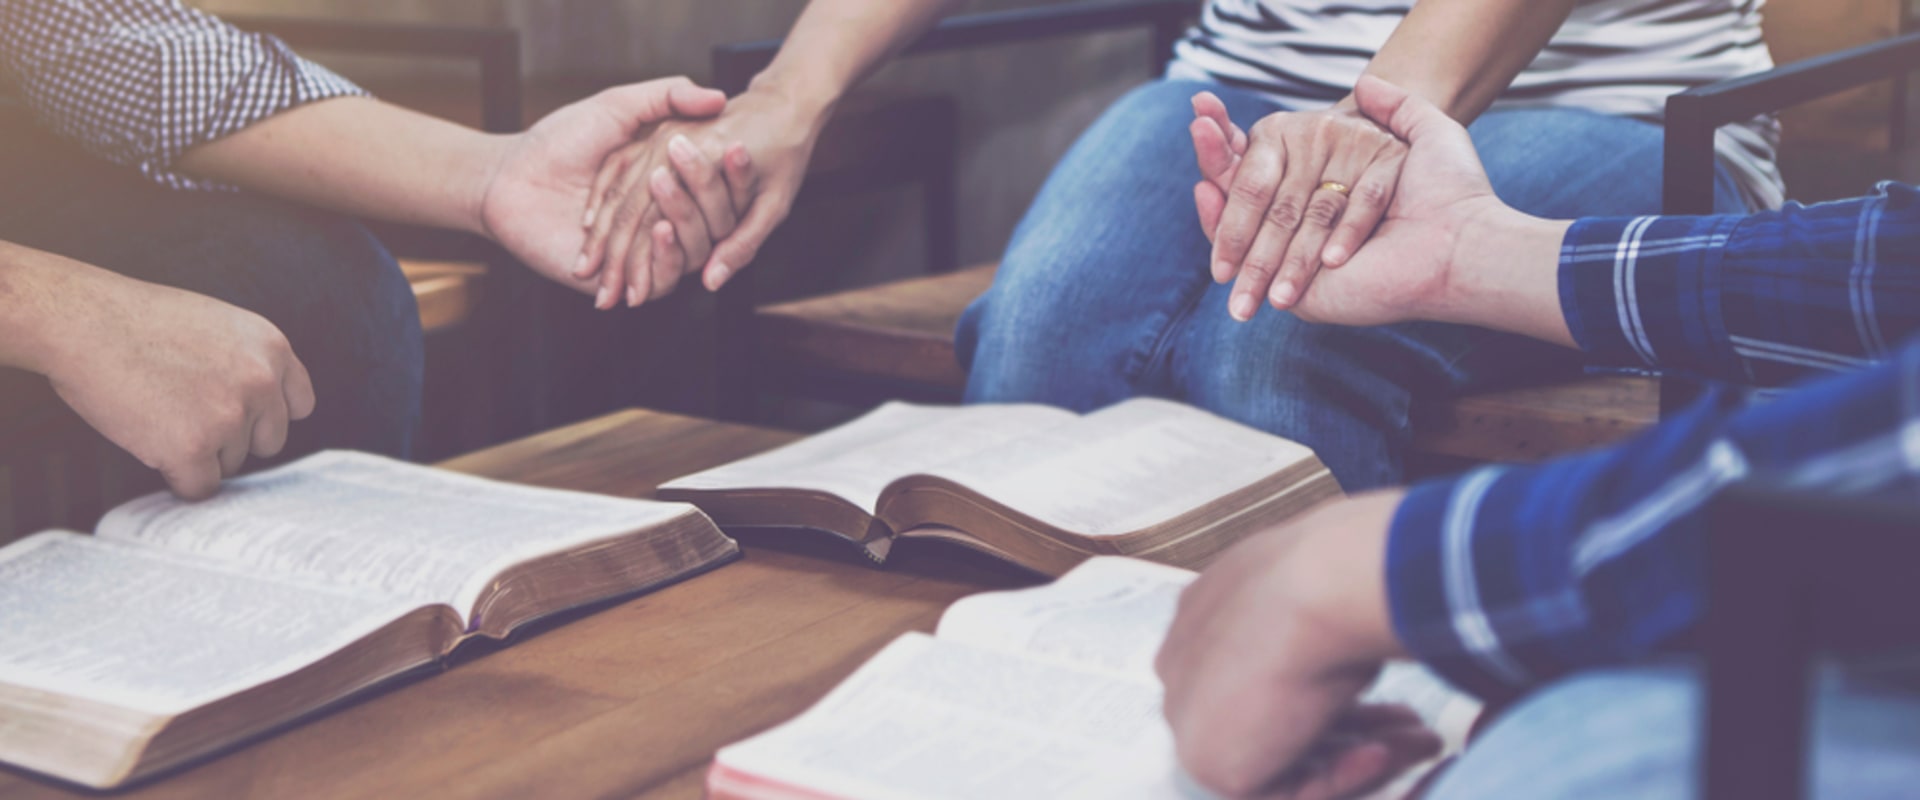 Finding Spiritual Connection: Christian Groups In Colorado Springs